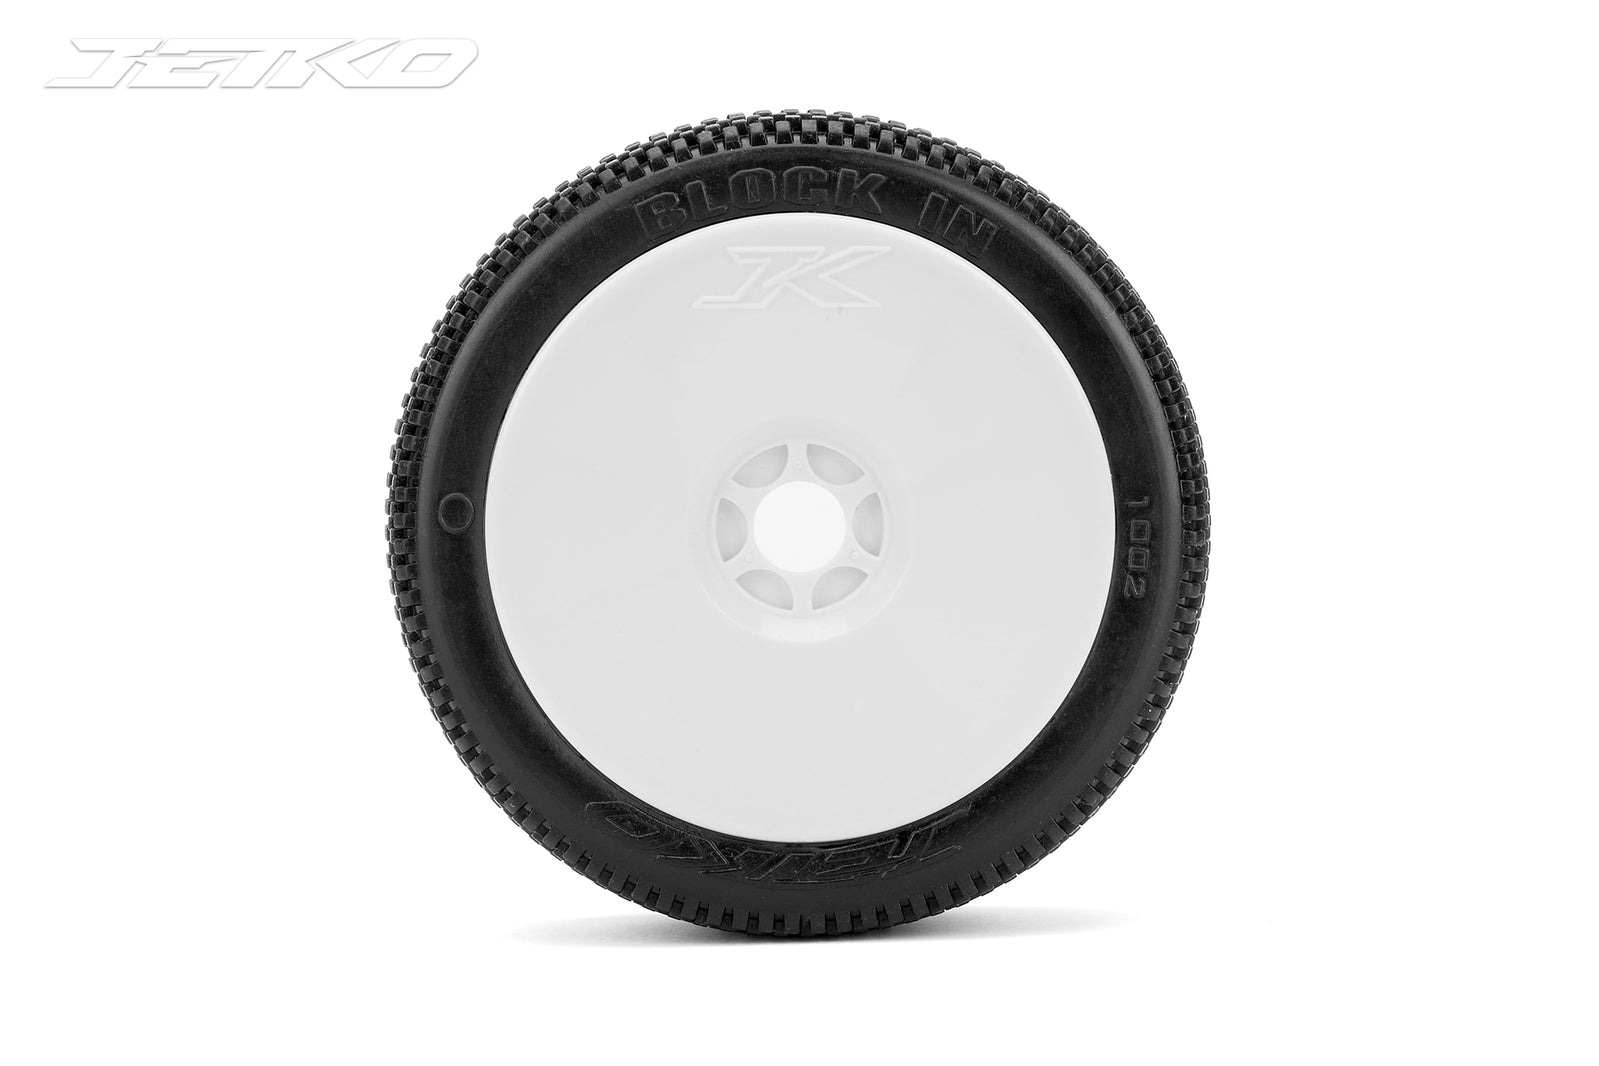 Jetko 1/8 Buggy Block In tires (Medium Soft Insert/Blue Grey) (2Pcs) [1002Ms6201Bg] - [Sunshine-Coast] - Jetko - [RC-Car] - [Scale-Model]